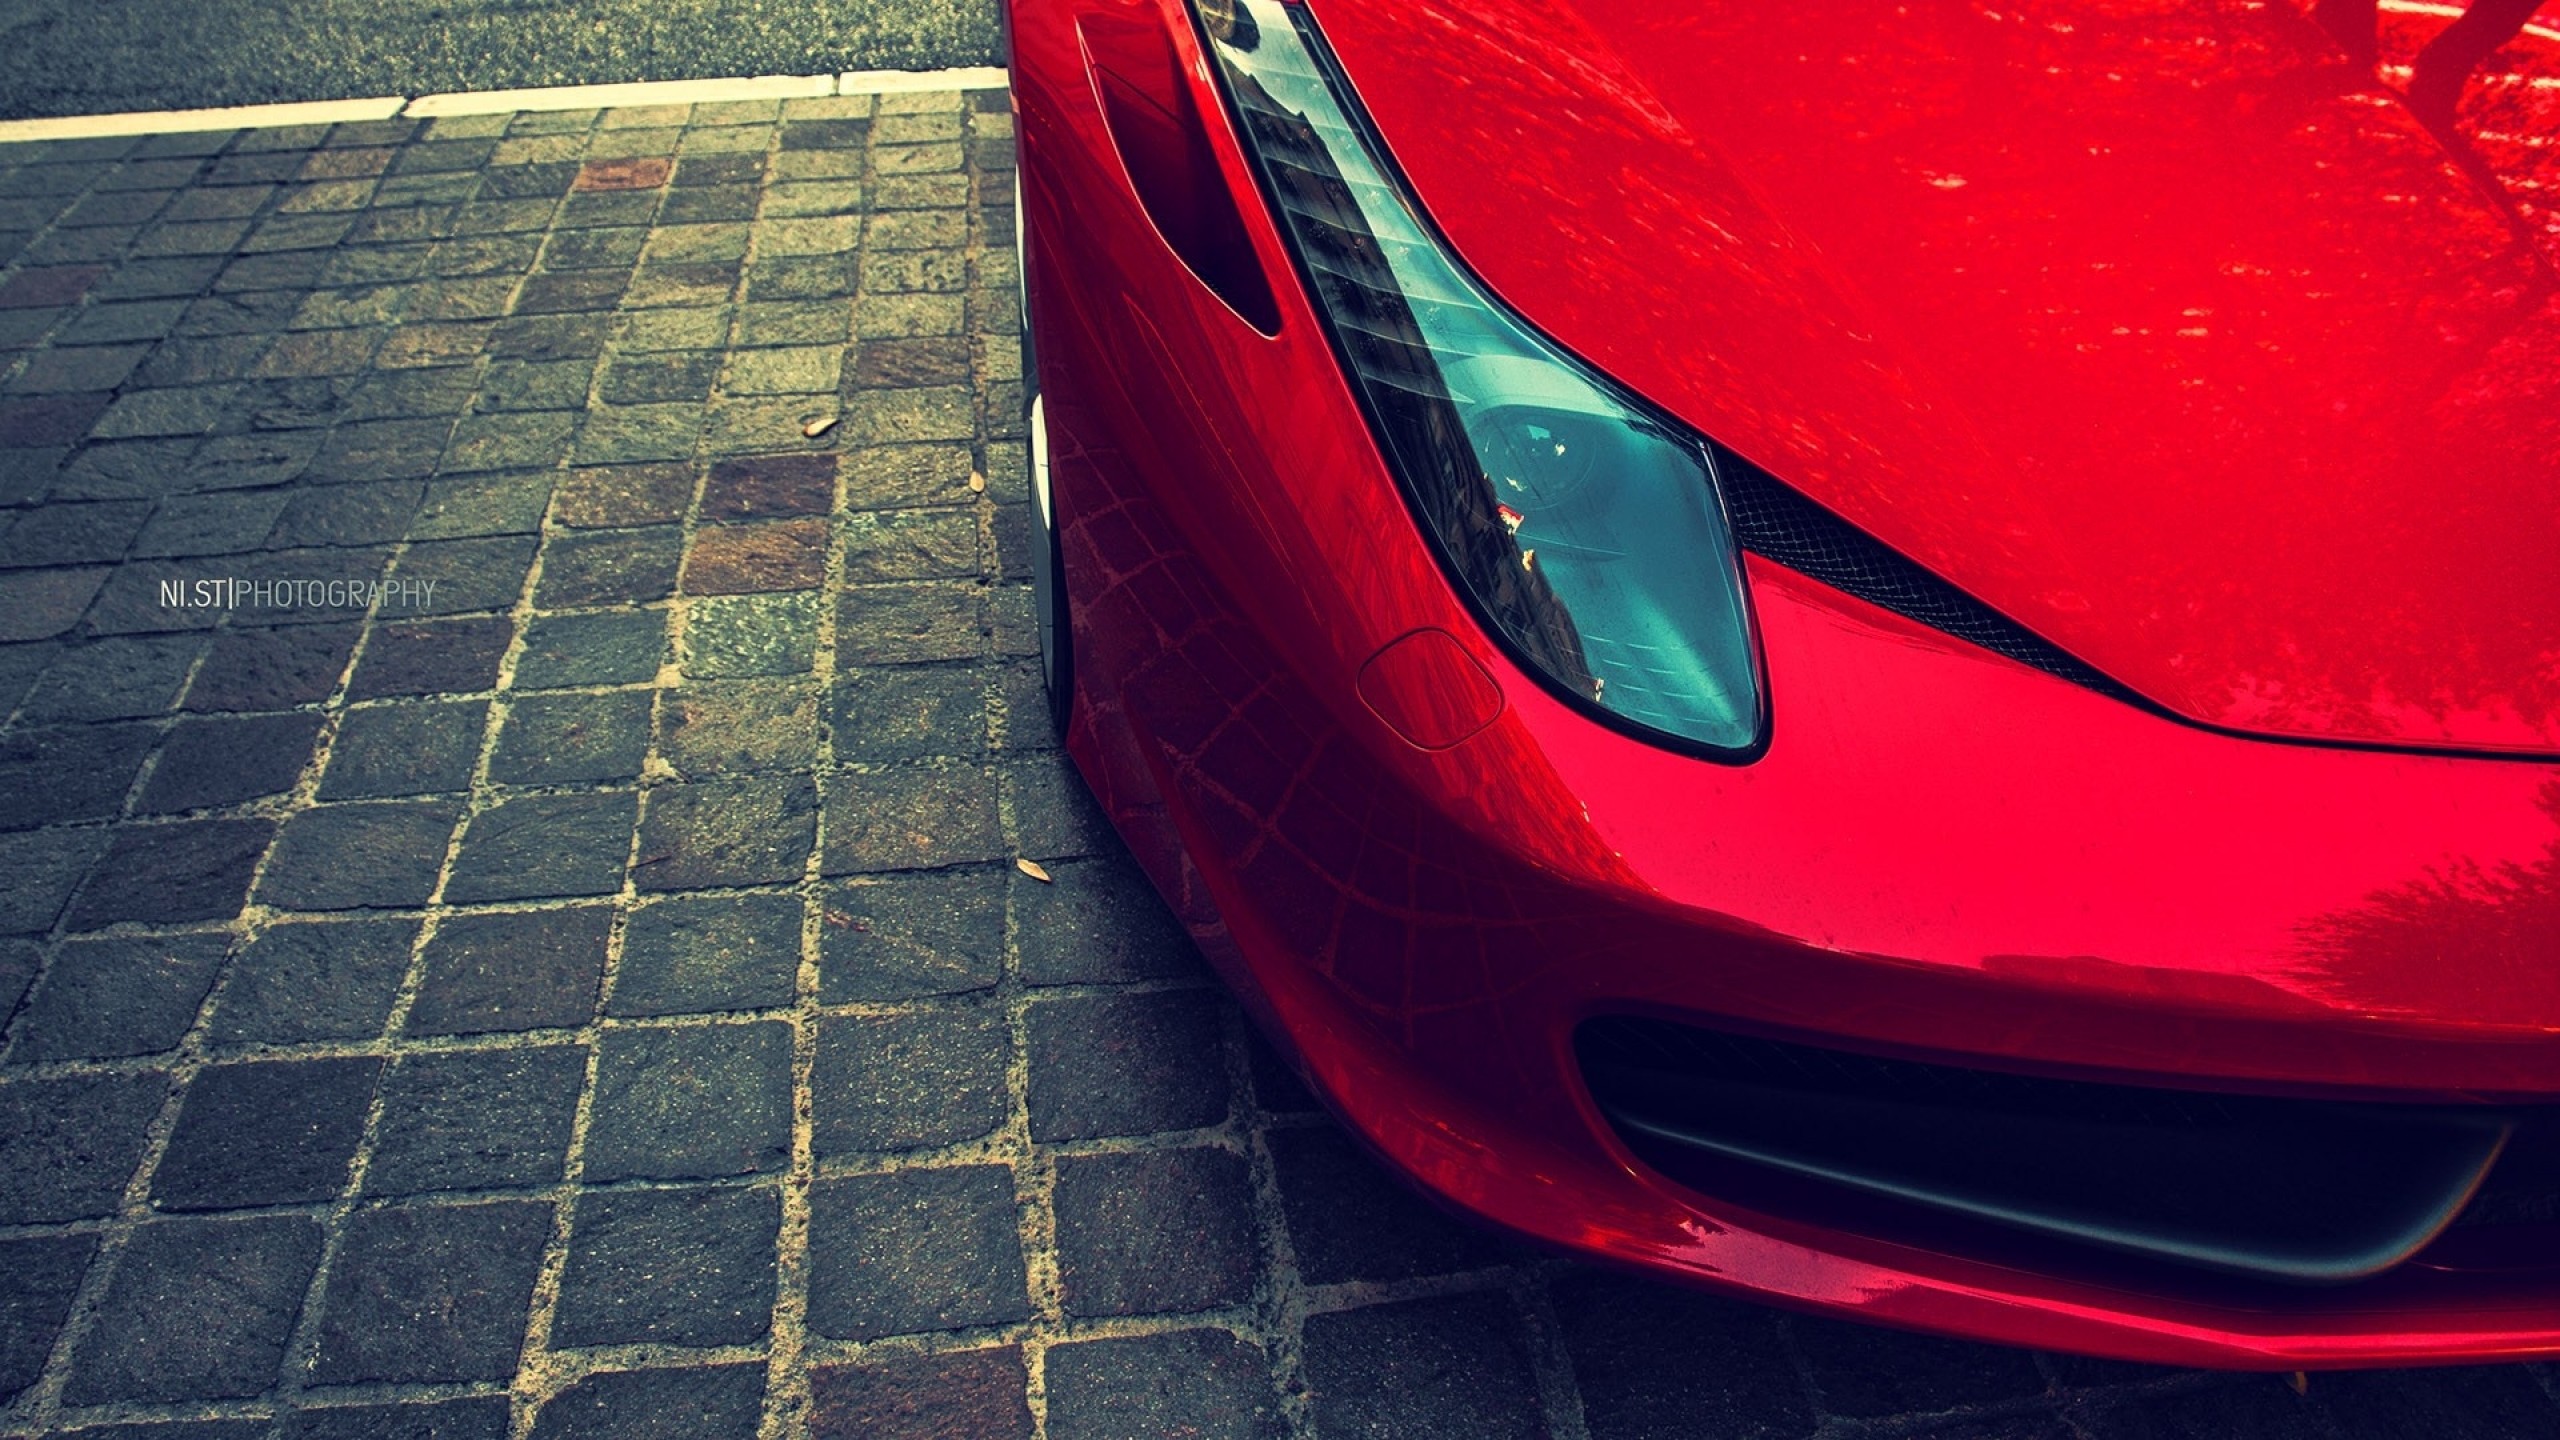 2560x1440 458 Italia. Ferrari on wallpapers ...